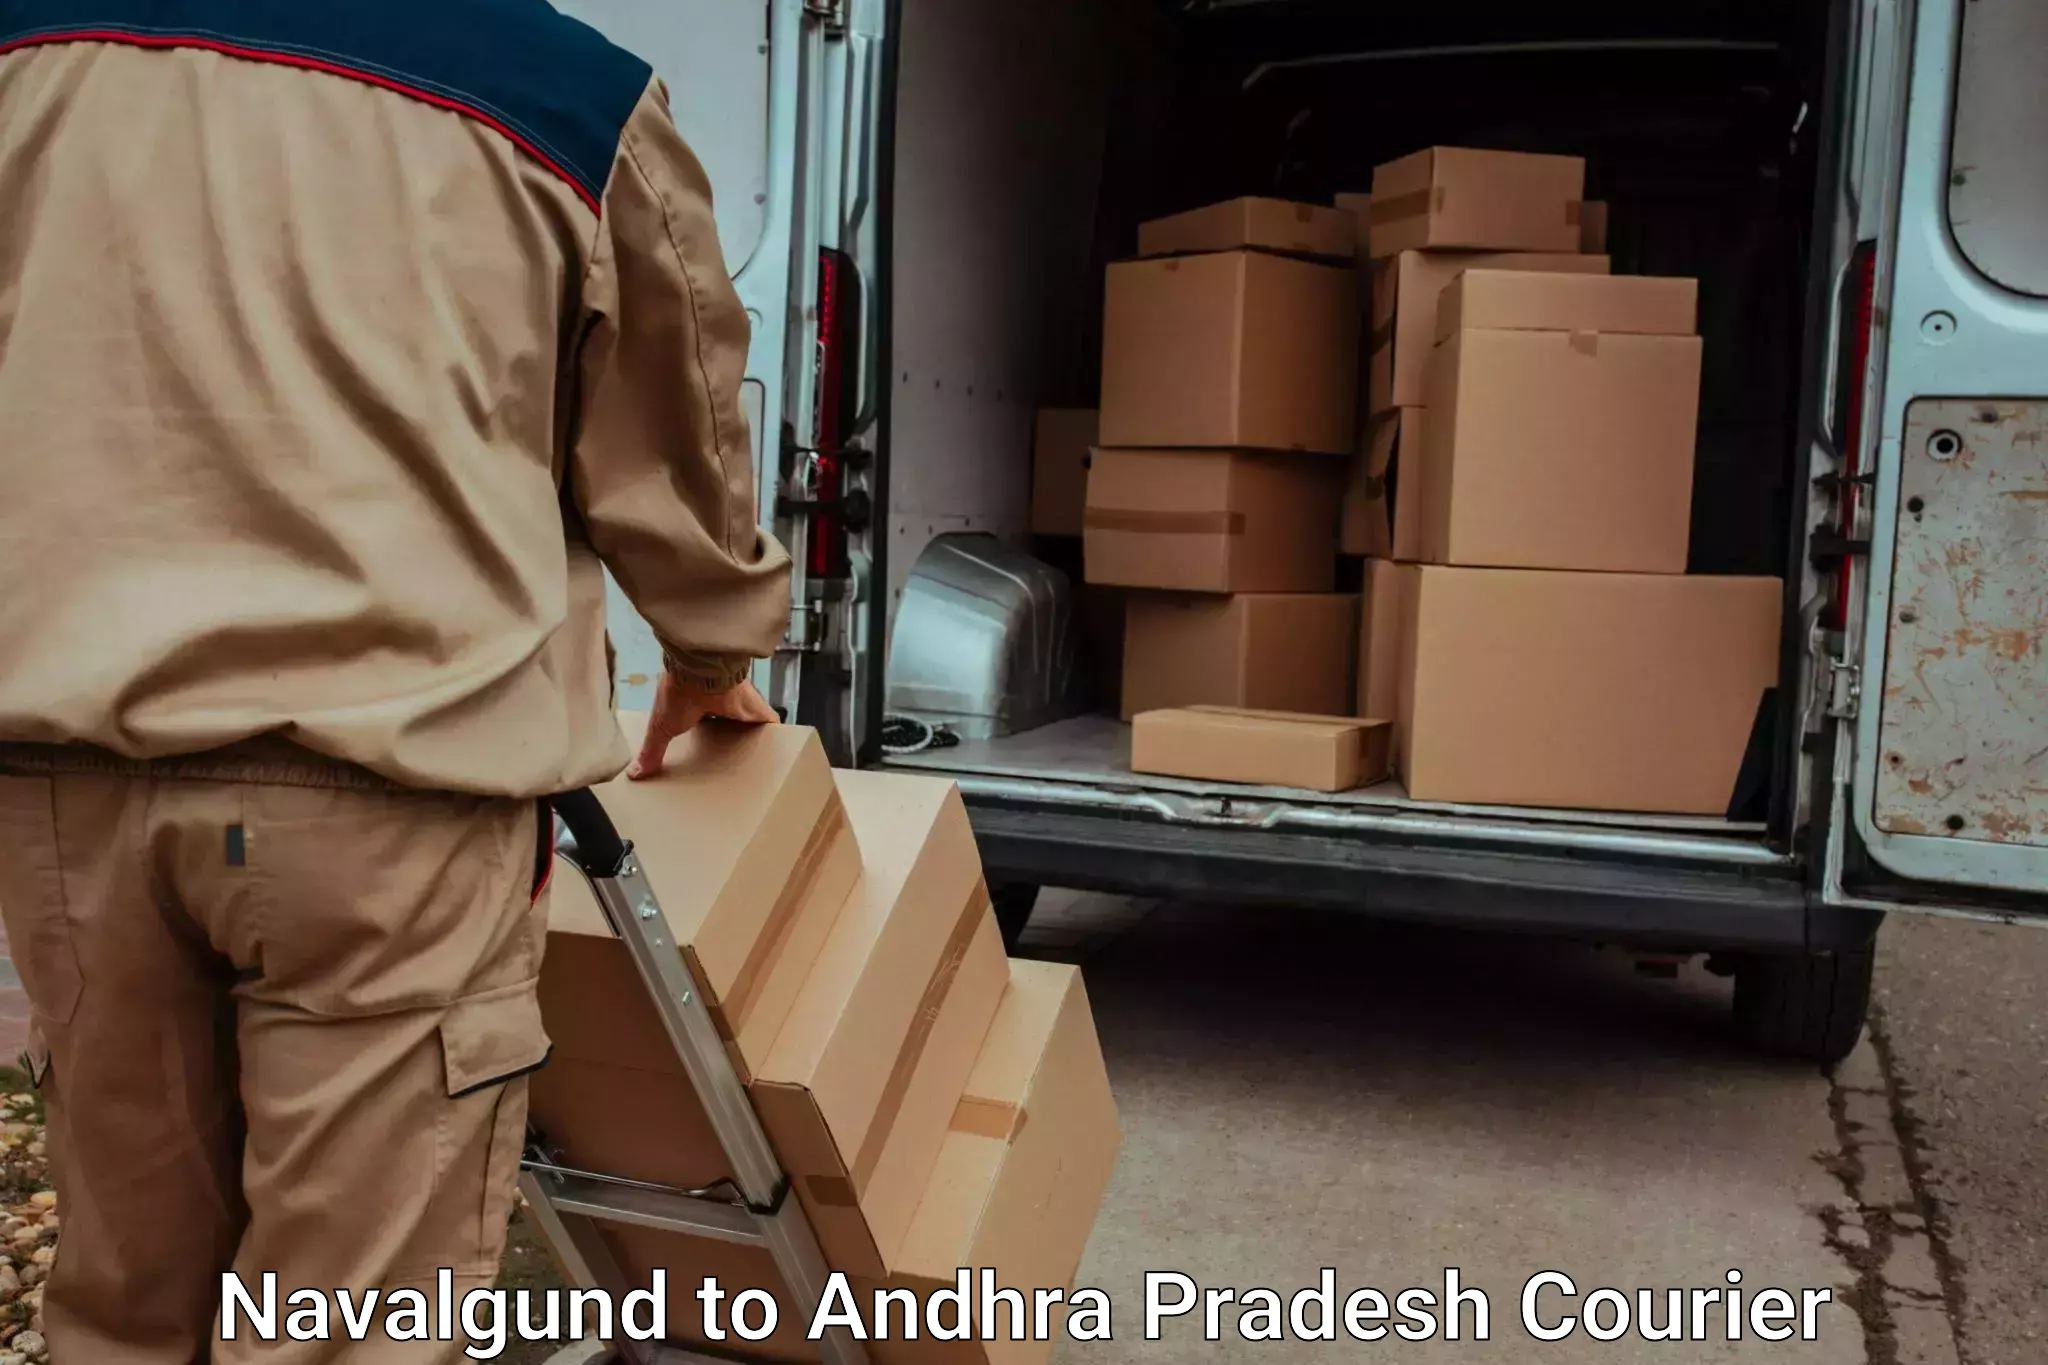 Baggage transport network Navalgund to Tirupati